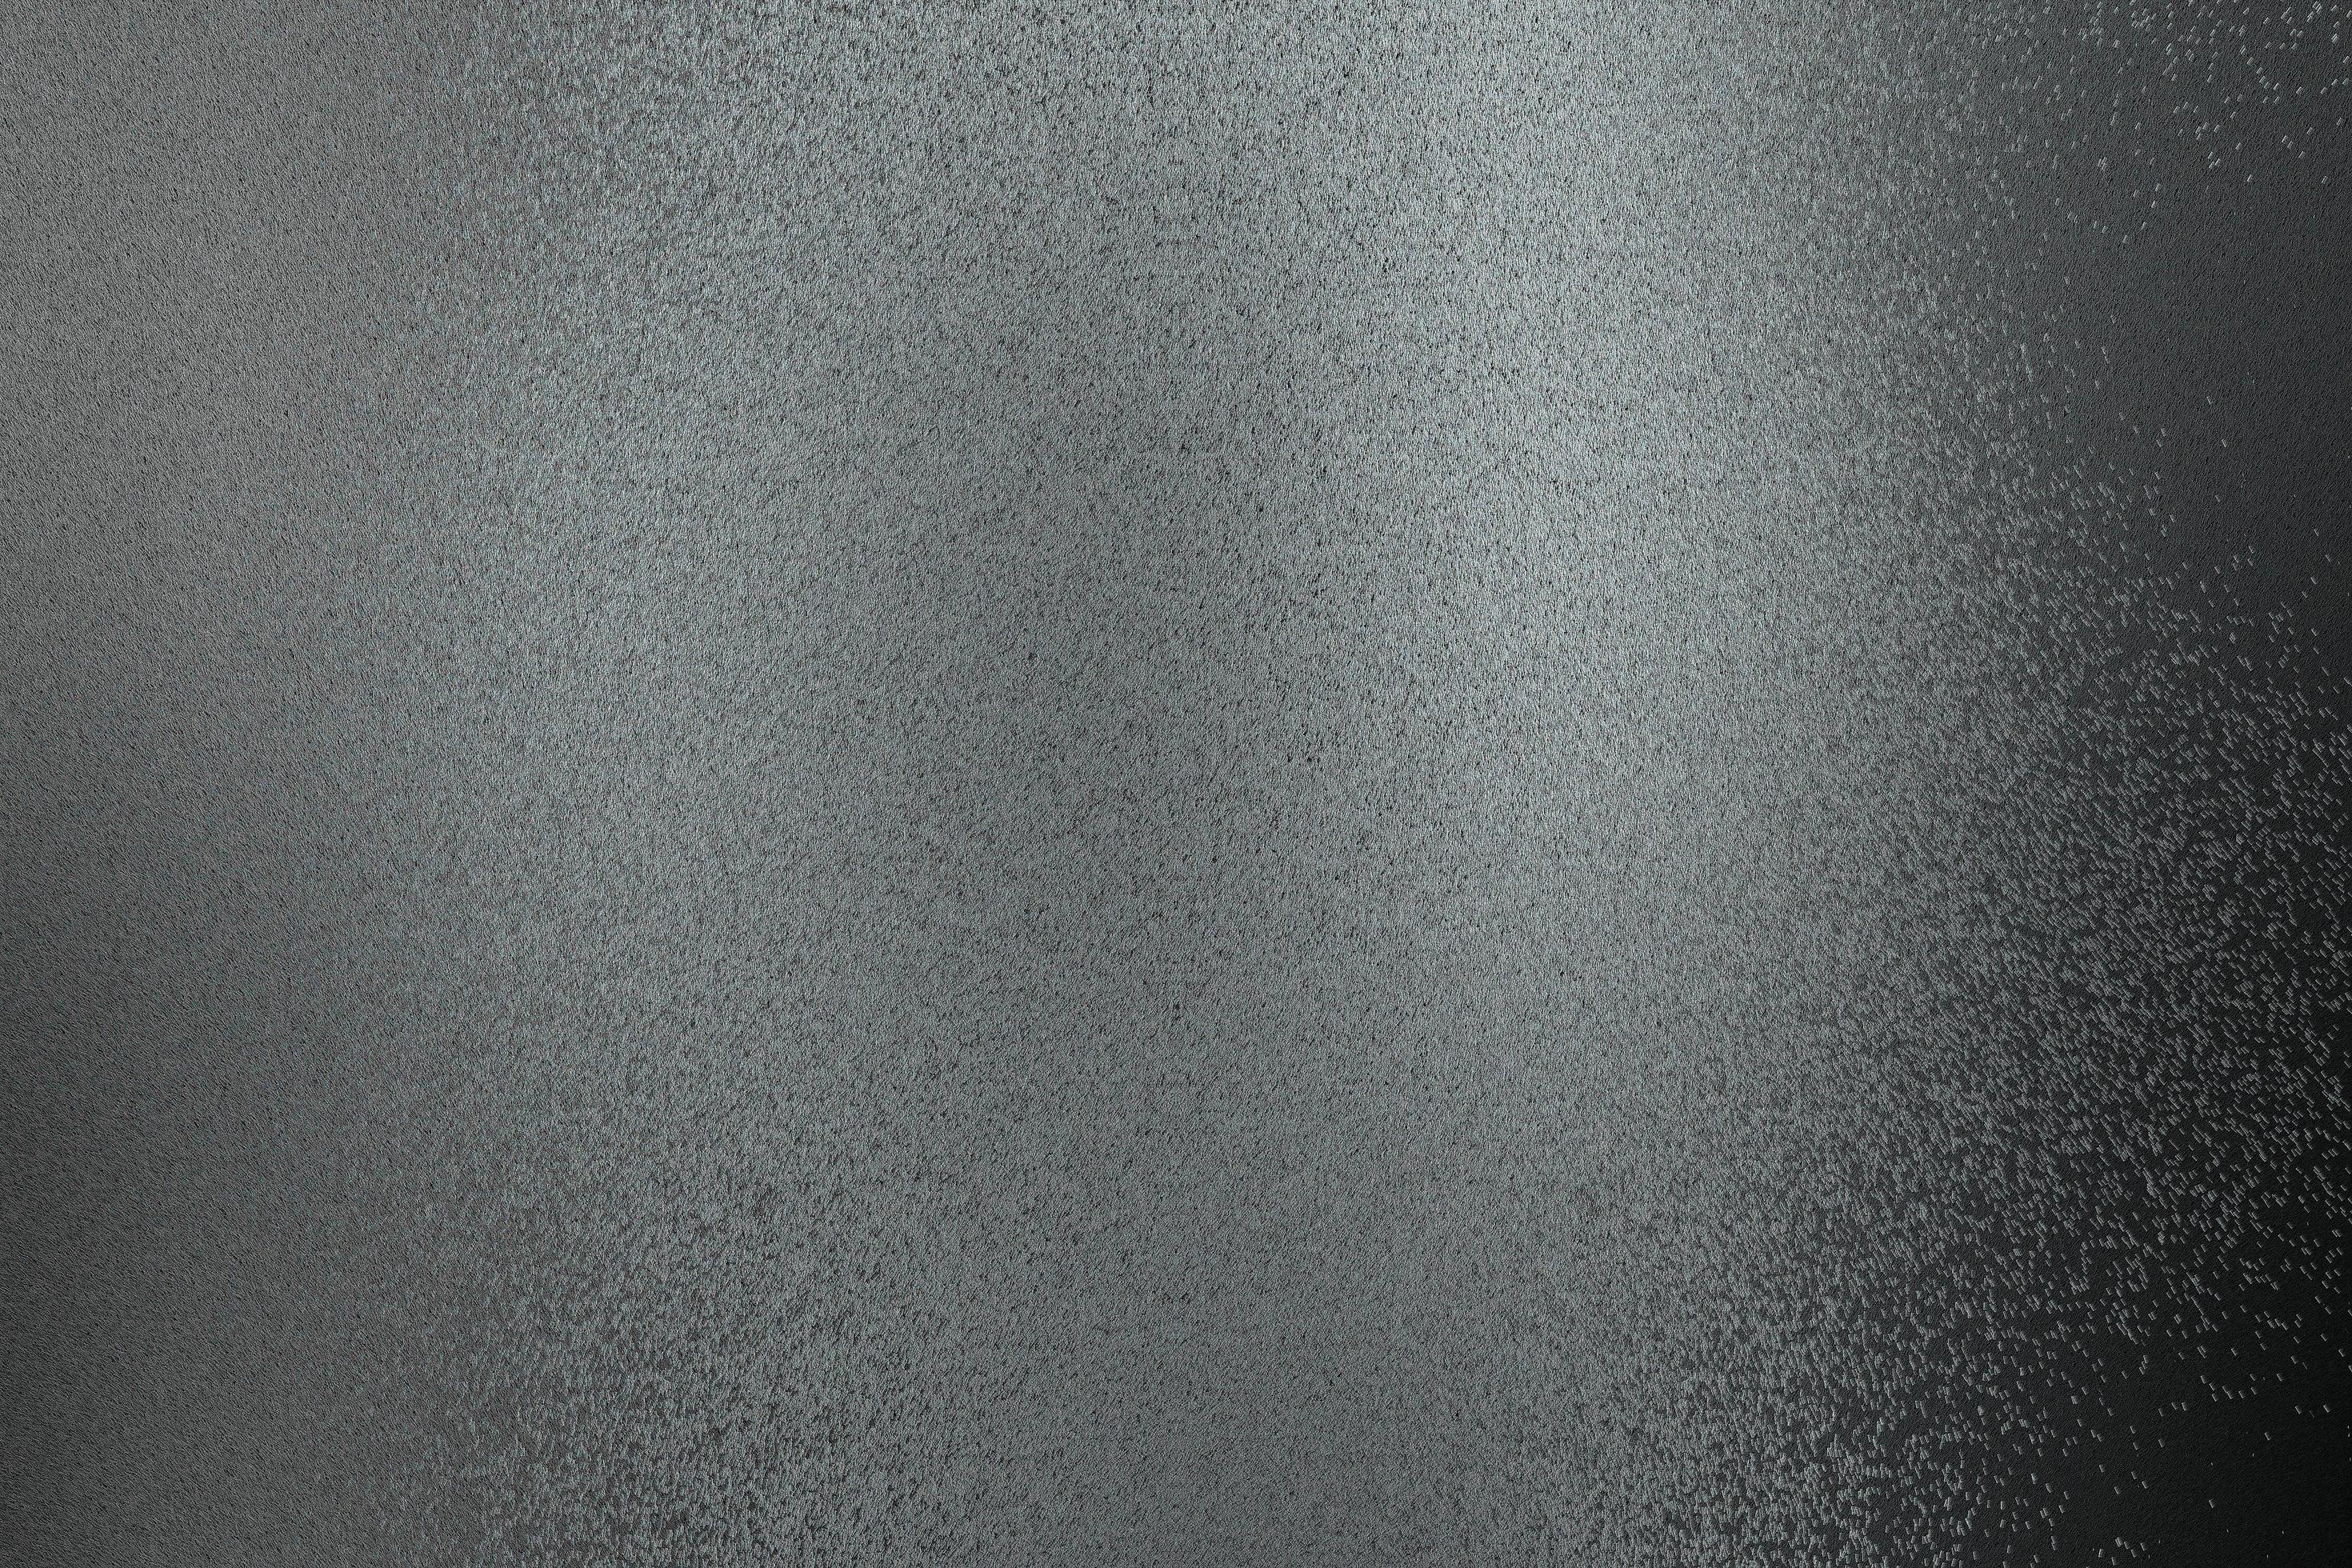 textura de acero duro, metal de pintura negra, fondo abstracto. 7009529  Foto de stock en Vecteezy